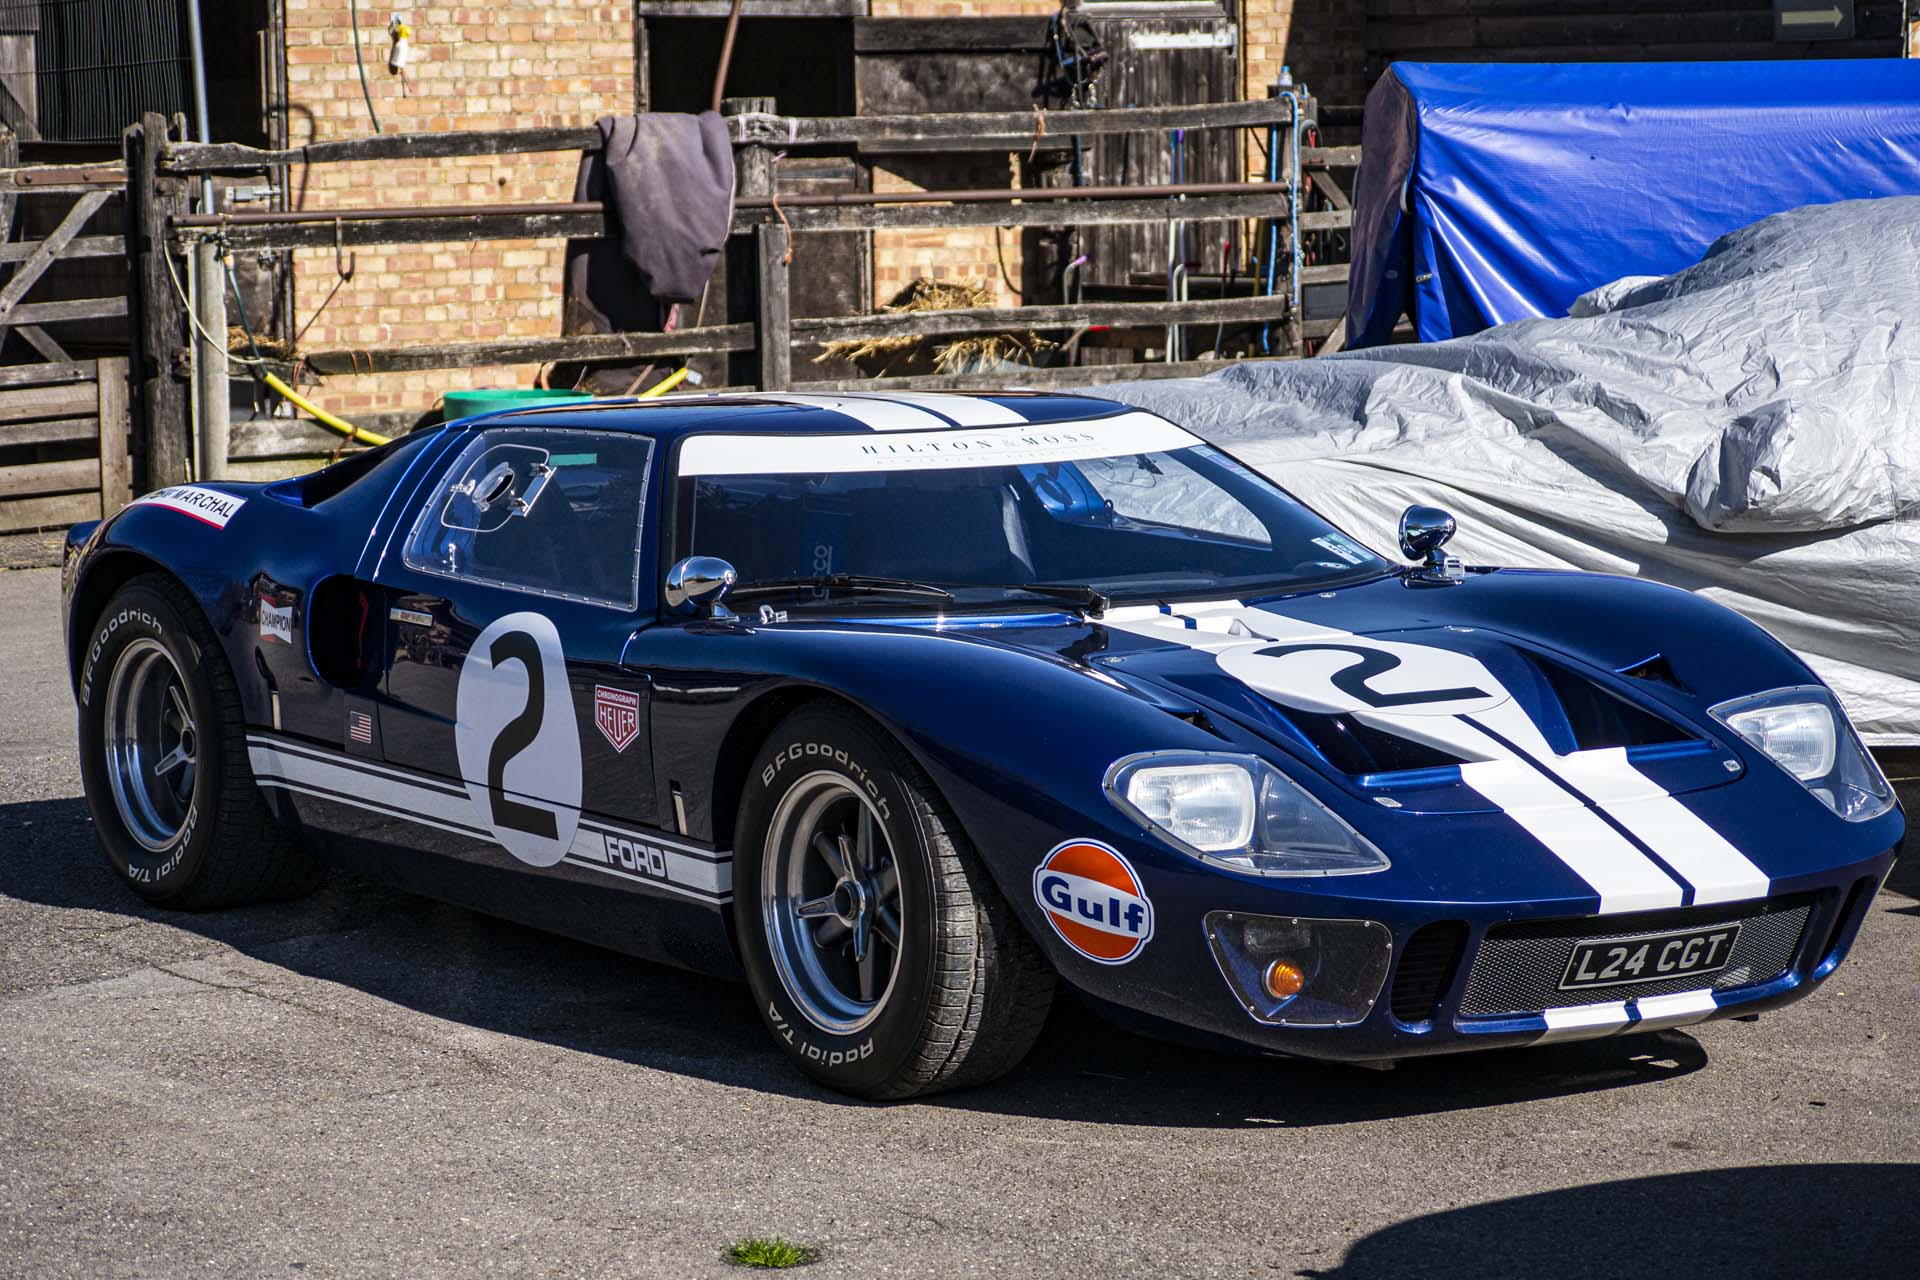 cars at RACE - a superb GT40 replica